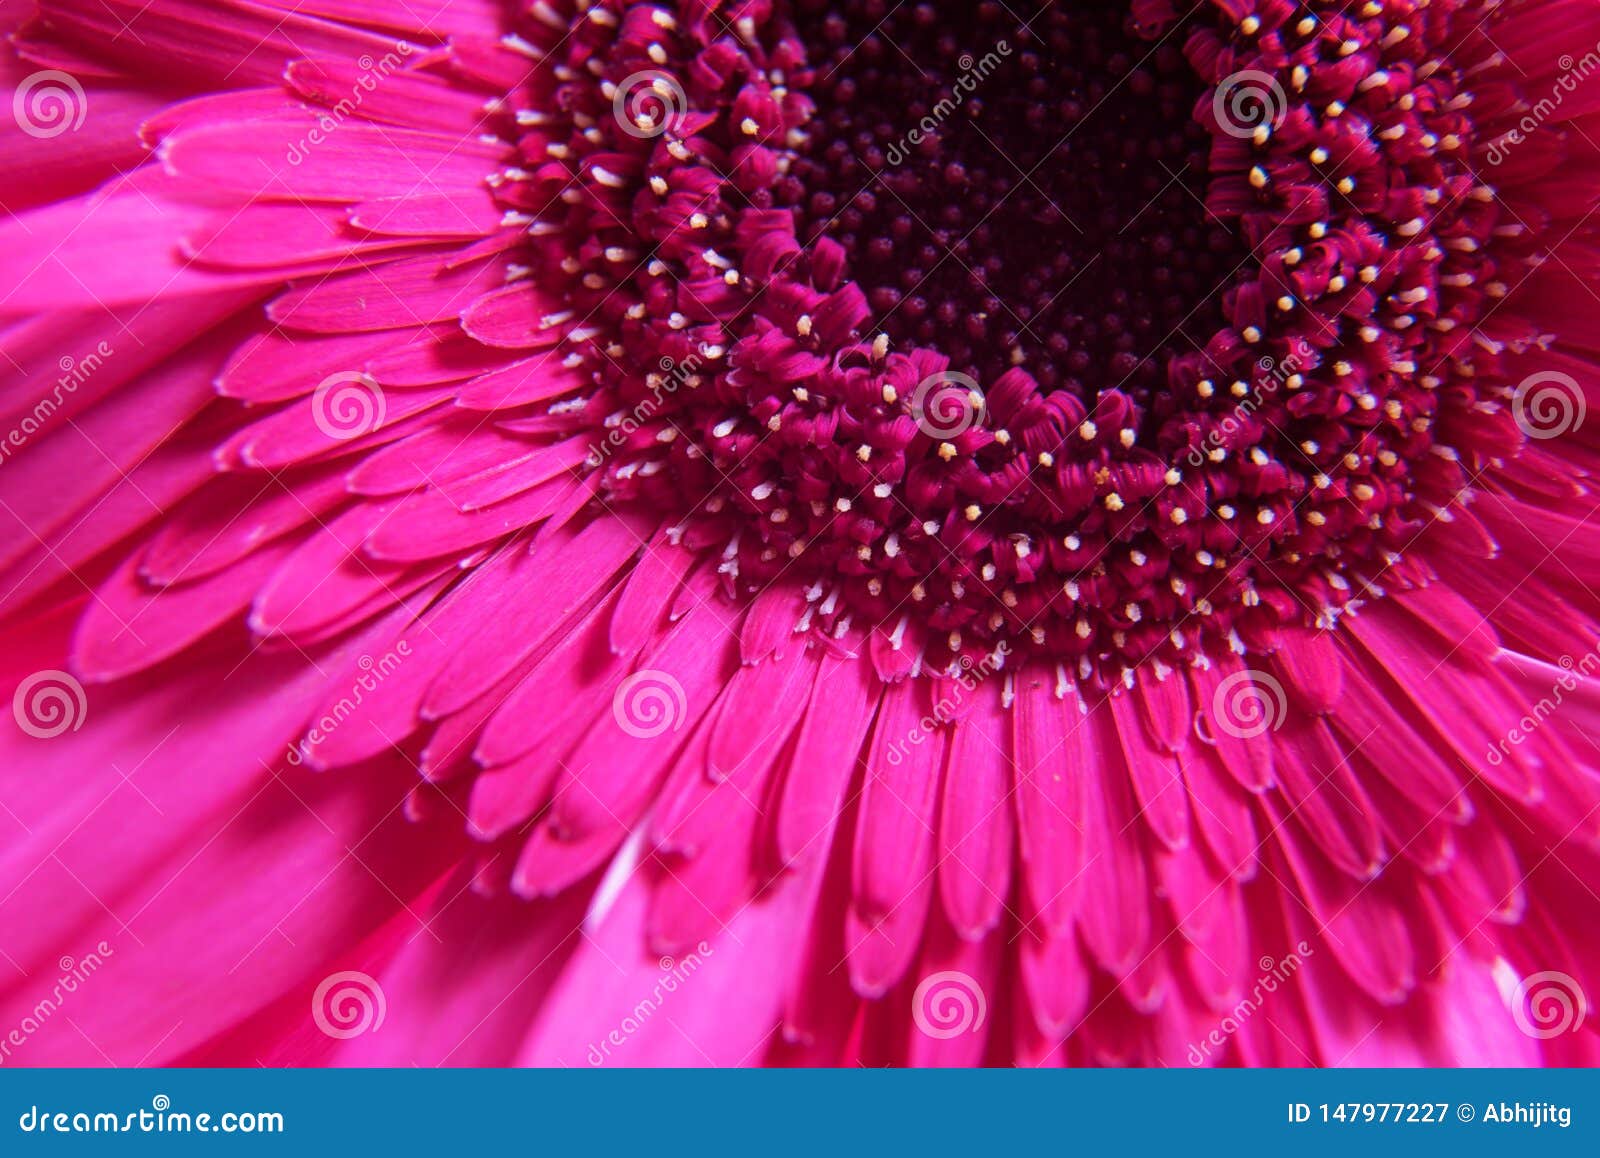 26241 Pink Flower 3d Wallpaper Images Stock Photos  Vectors   Shutterstock